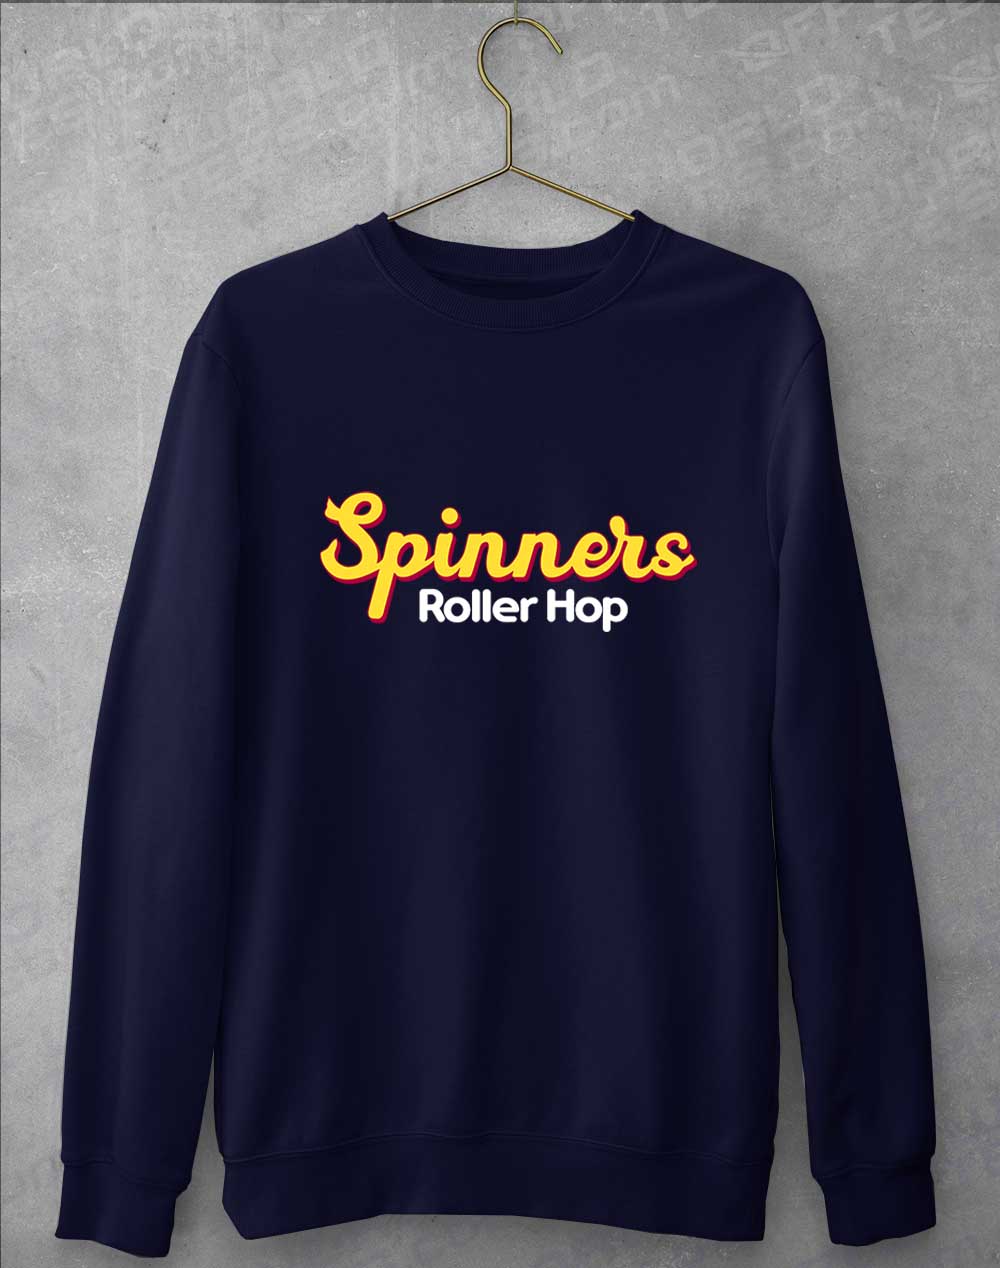 Oxford Navy - Spinners Roller Hop Sweatshirt